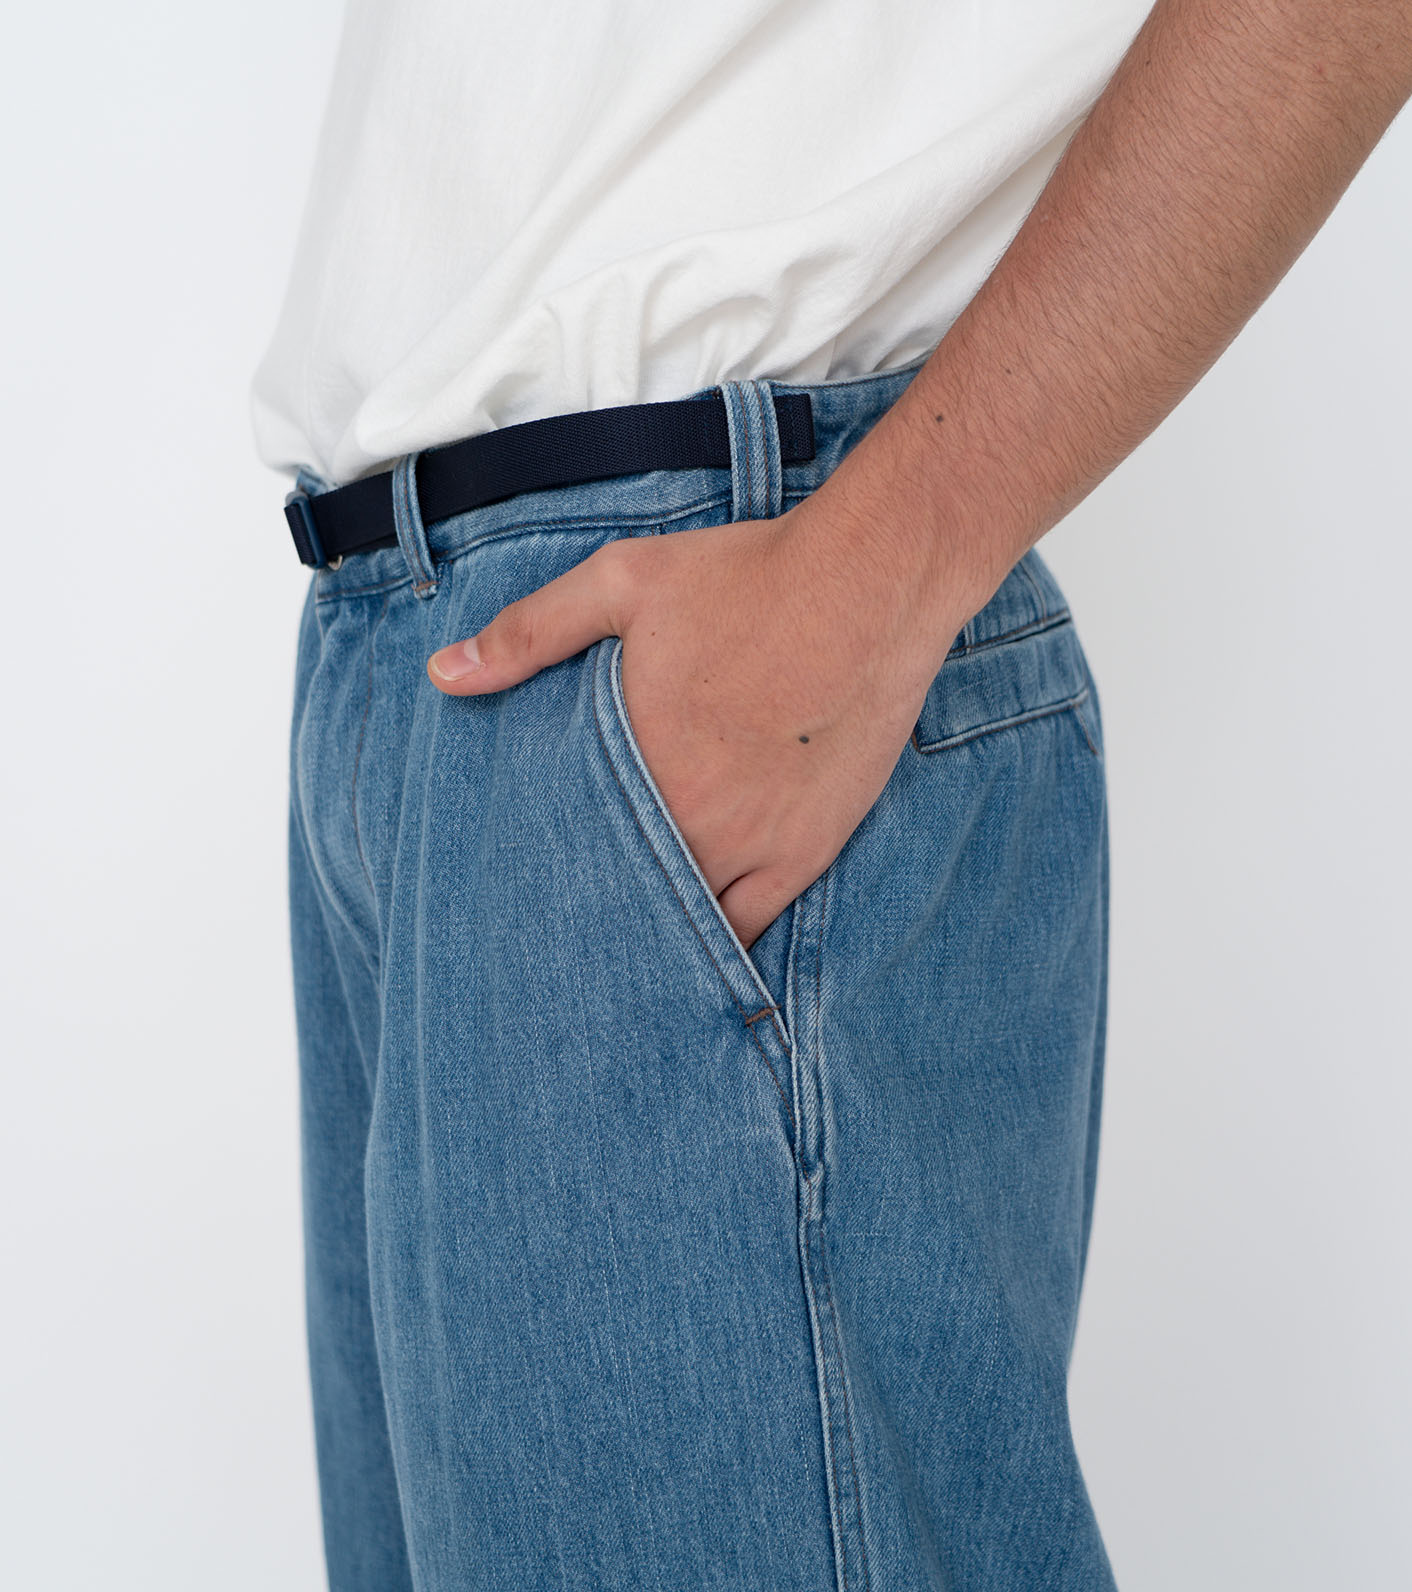 nanamica / Denim Wide Tapered Field Pants